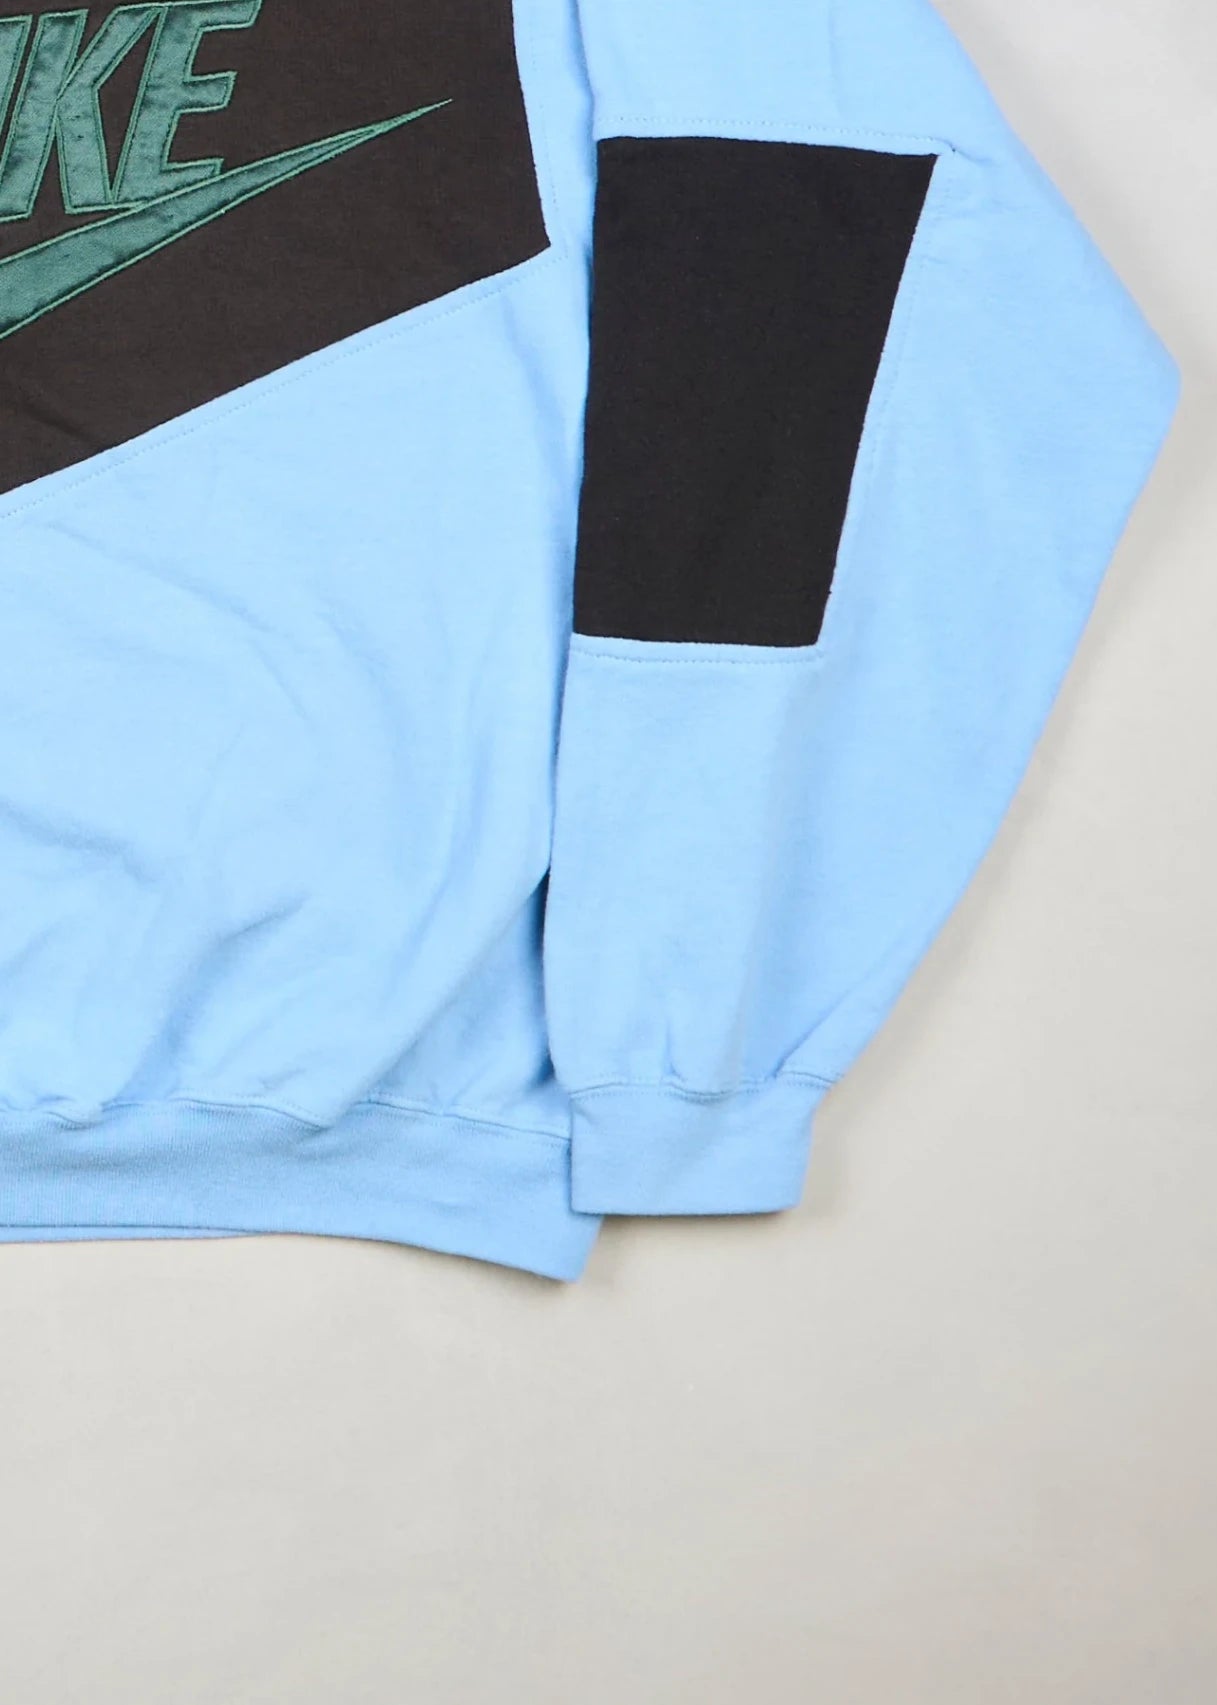 Nike - Sweatshirt (M) Bottom Right